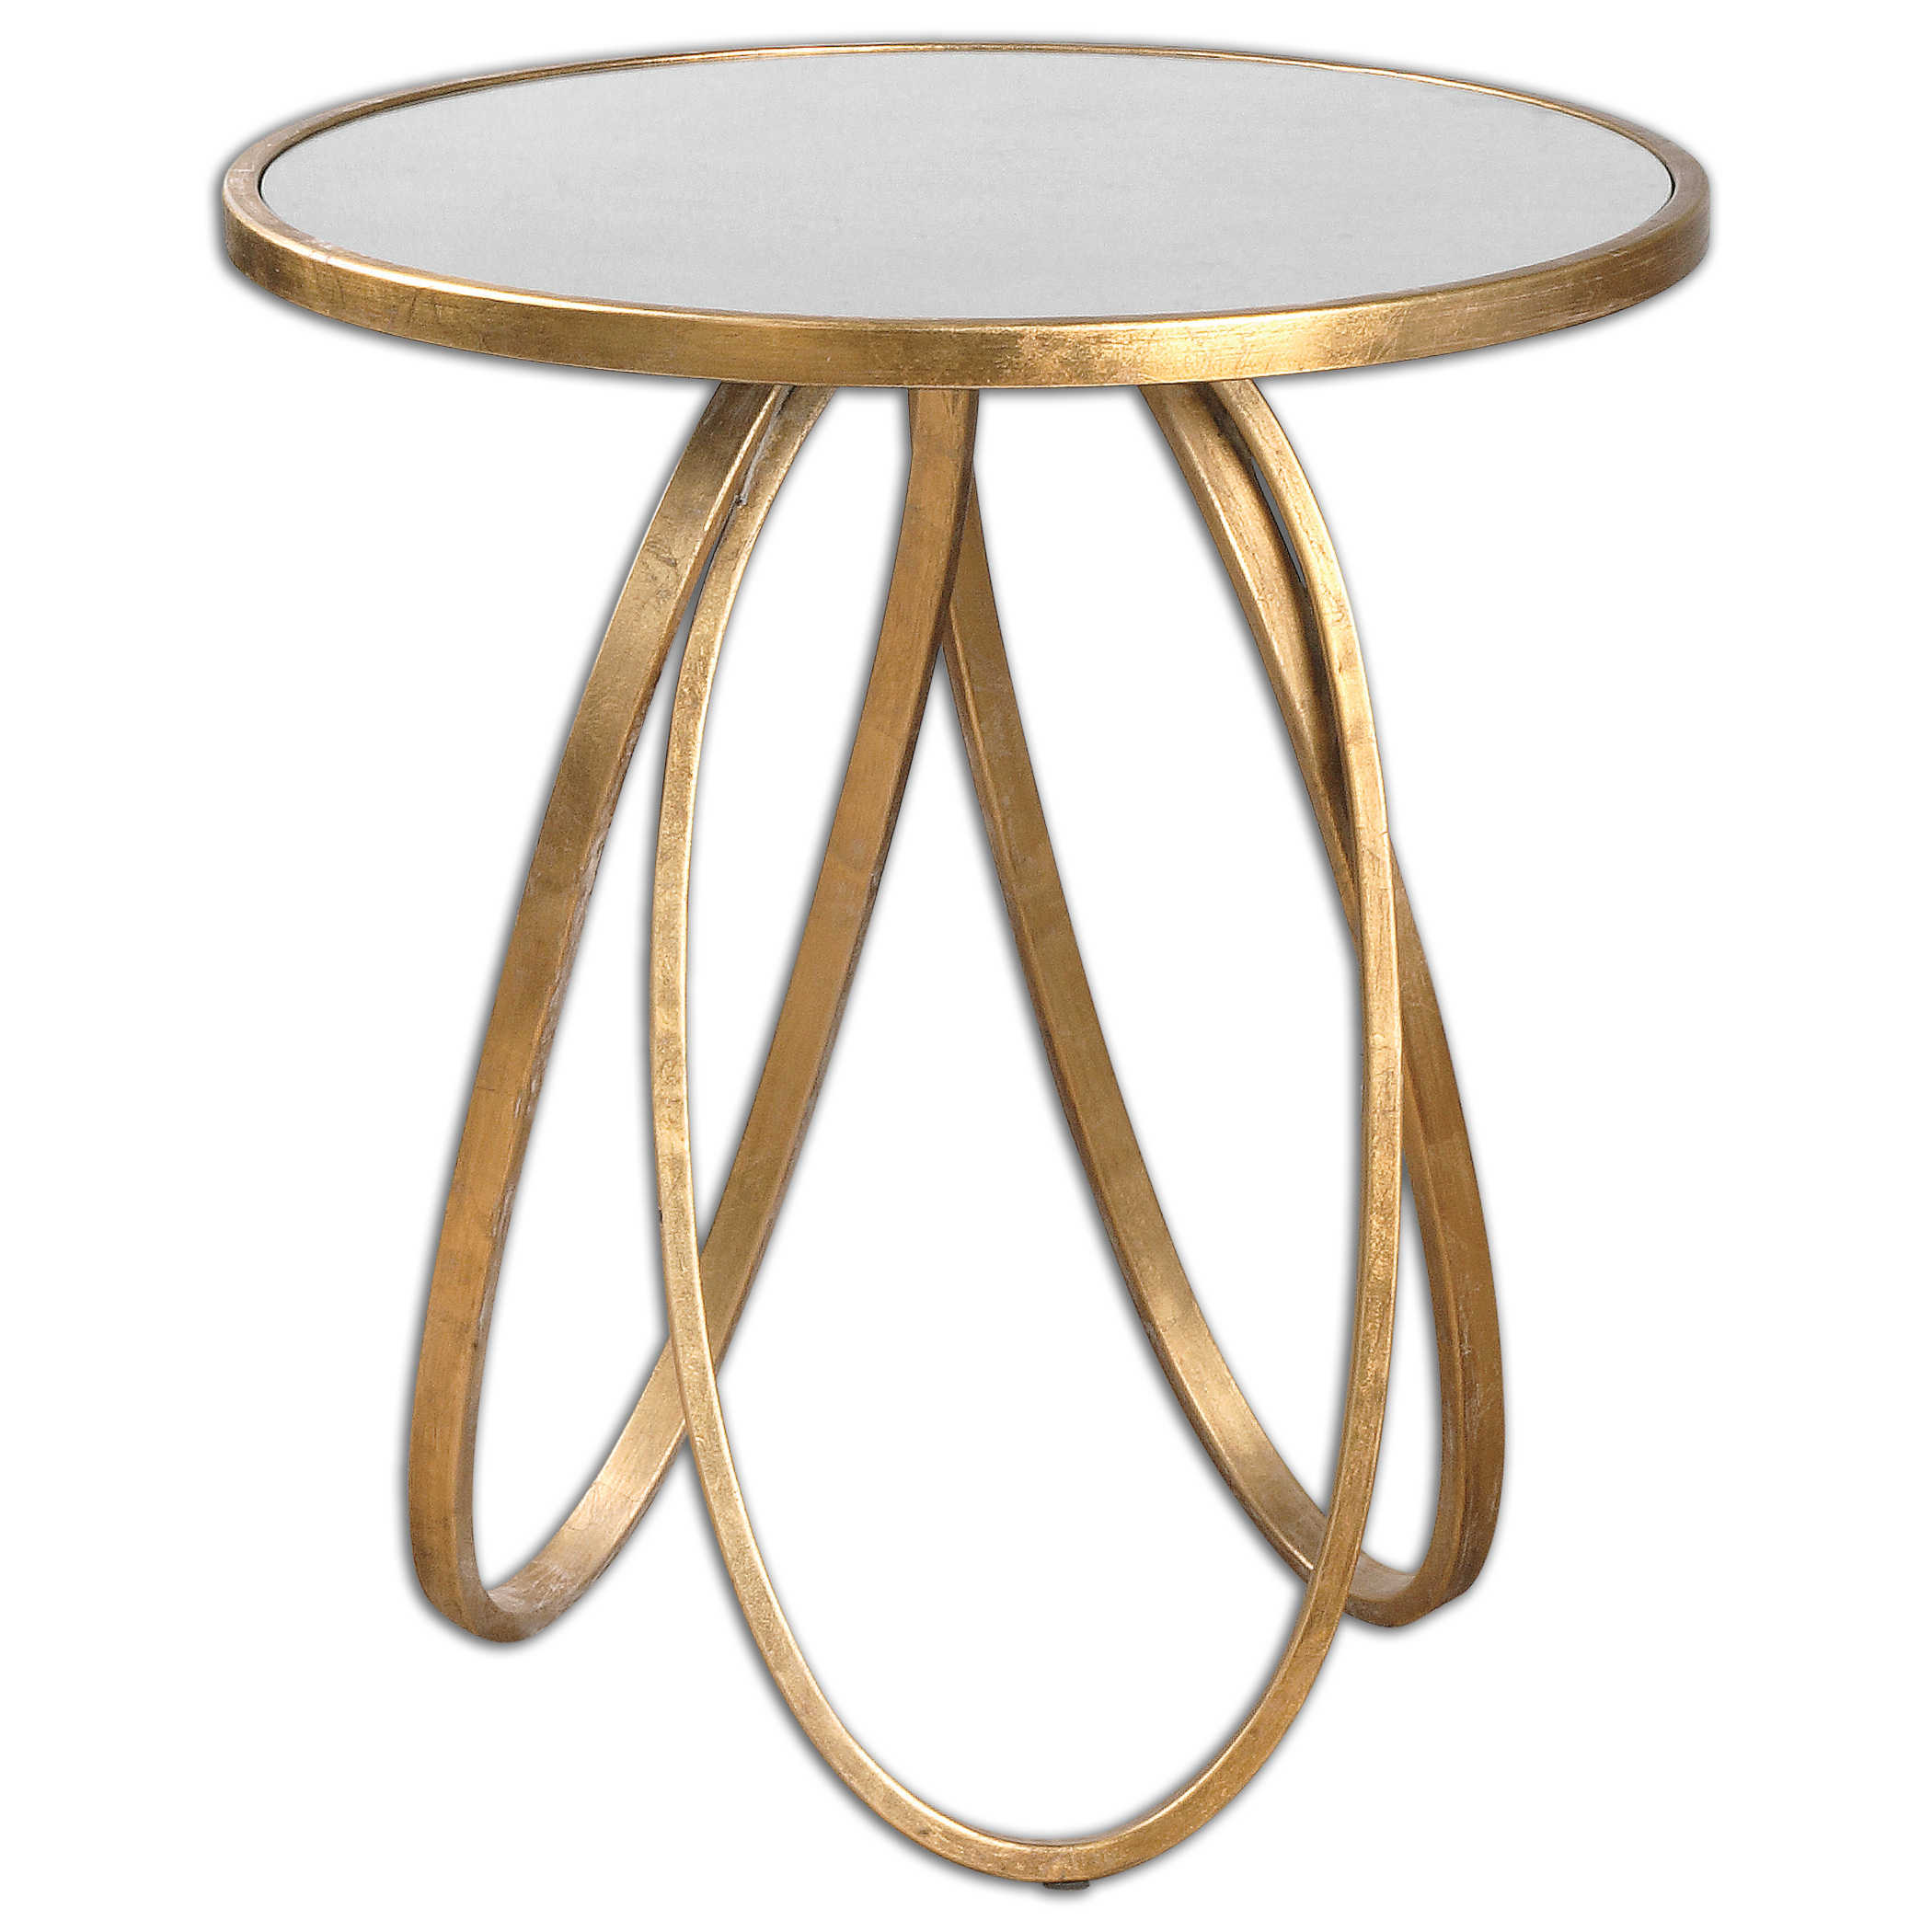 Столик с золотом. Столик Uttermost. Приставной столик rhet золотой. Кофейный столик CLANDAY Lino small Gold Drum Side Table Gold. Столик придиванный приставной круглый.